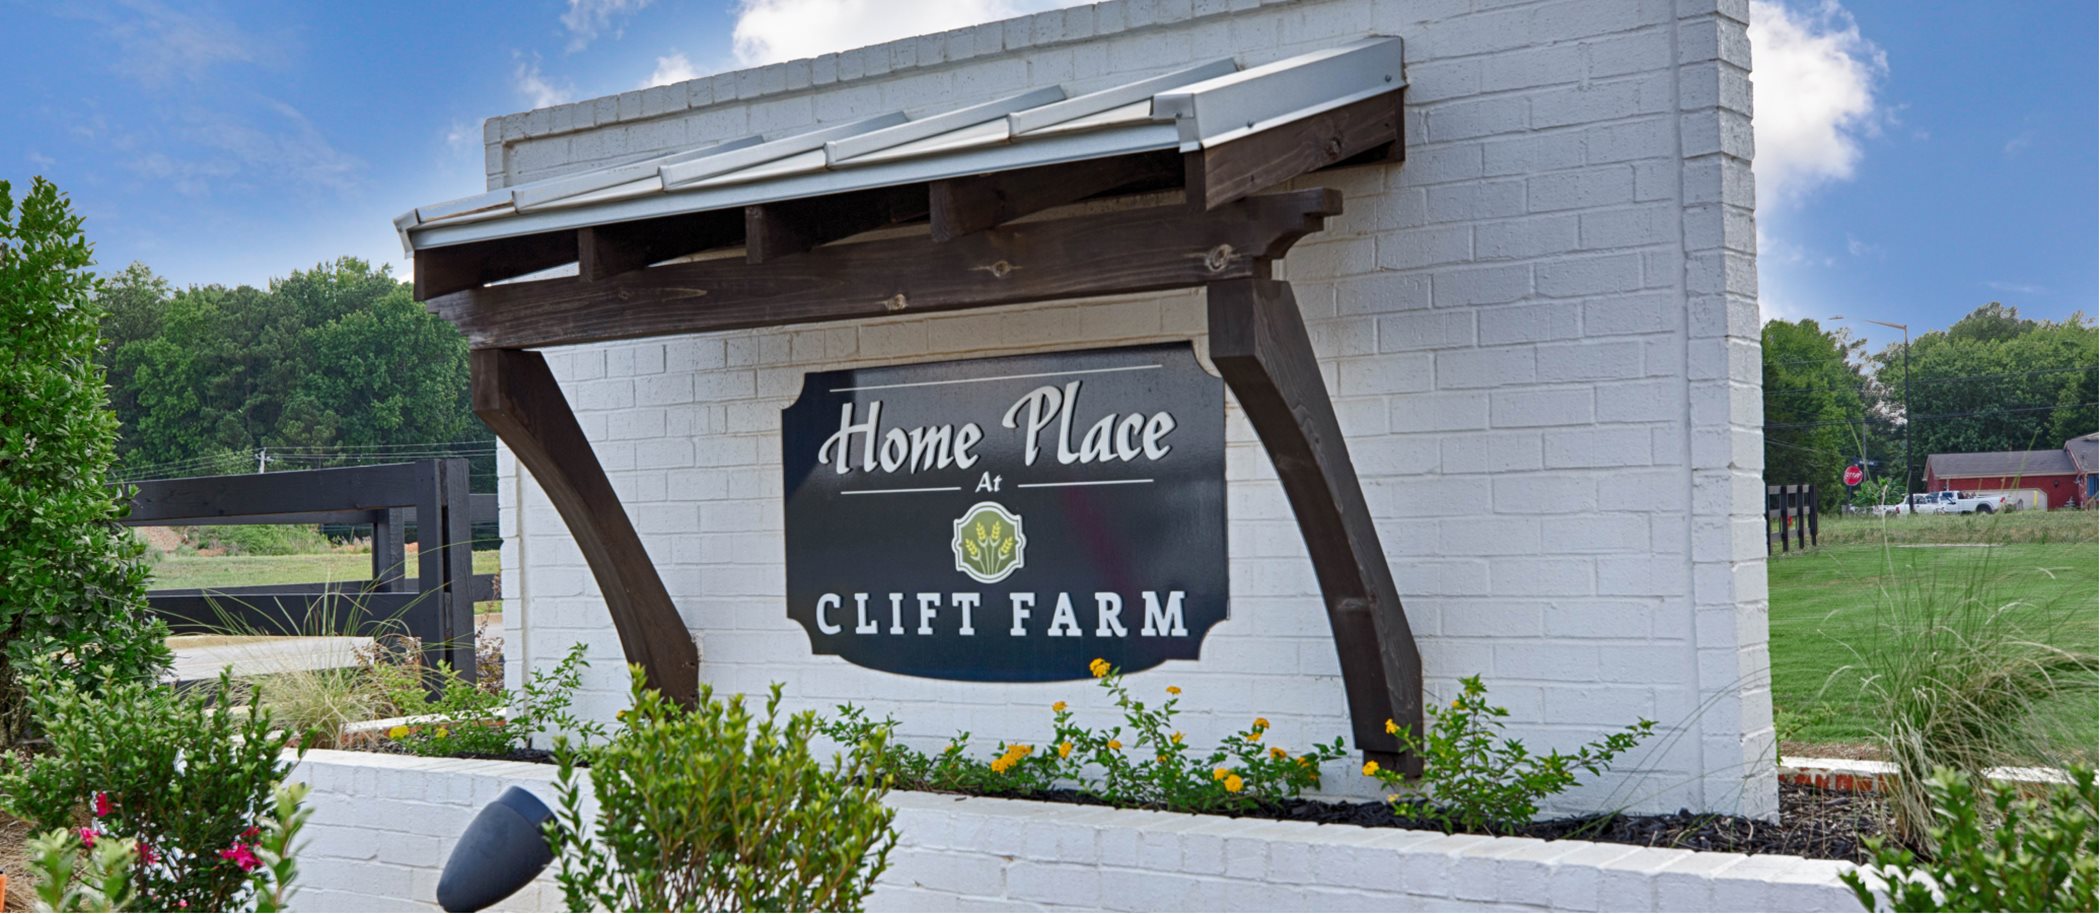 Clift Farm entry sign